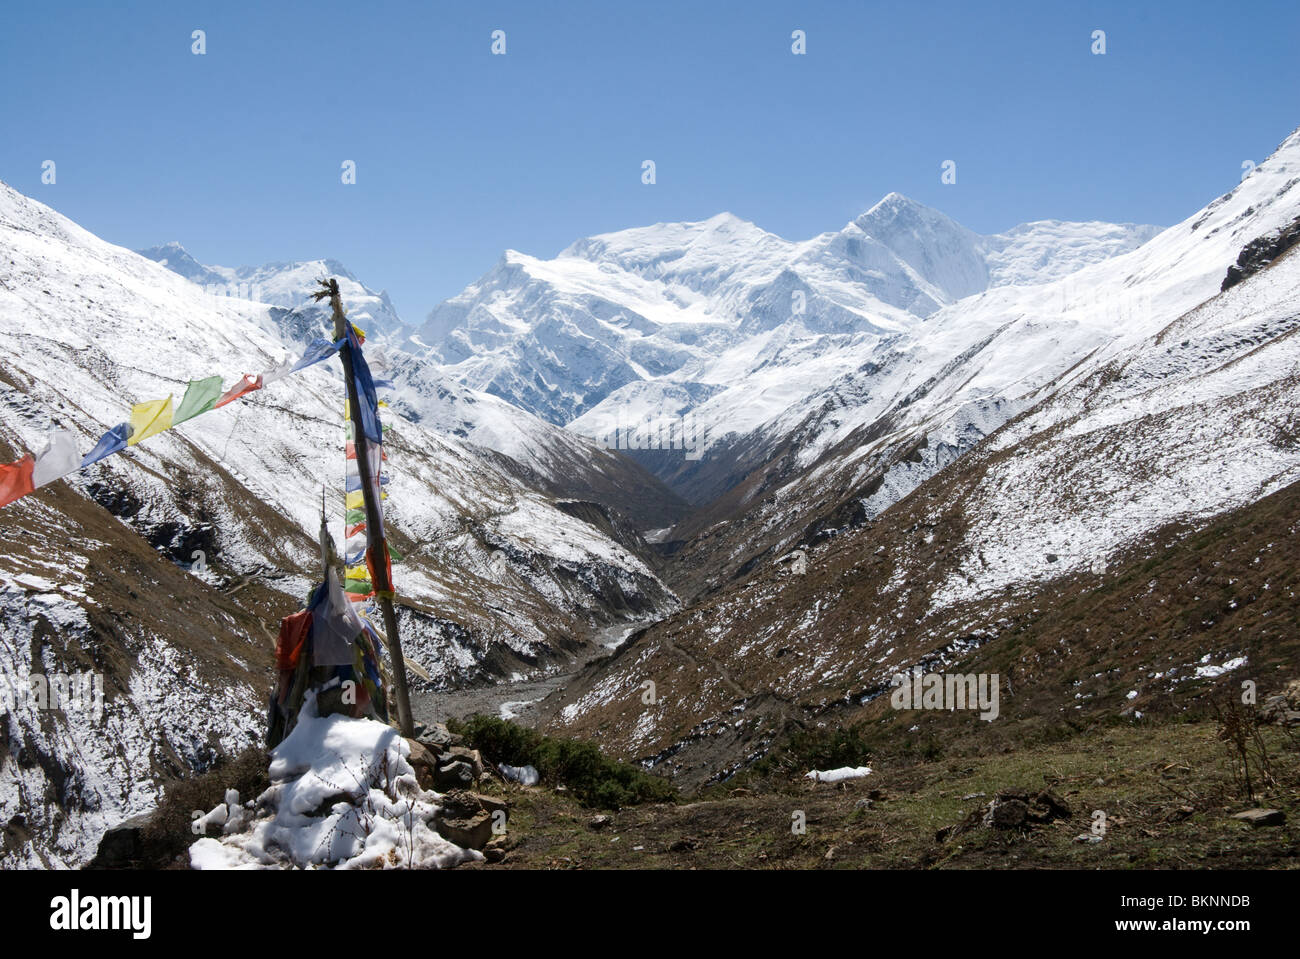 Prayer Flags and snow clad mountains, Thorung Phedi, Annapurna Circuit, Nepal Stock Photo